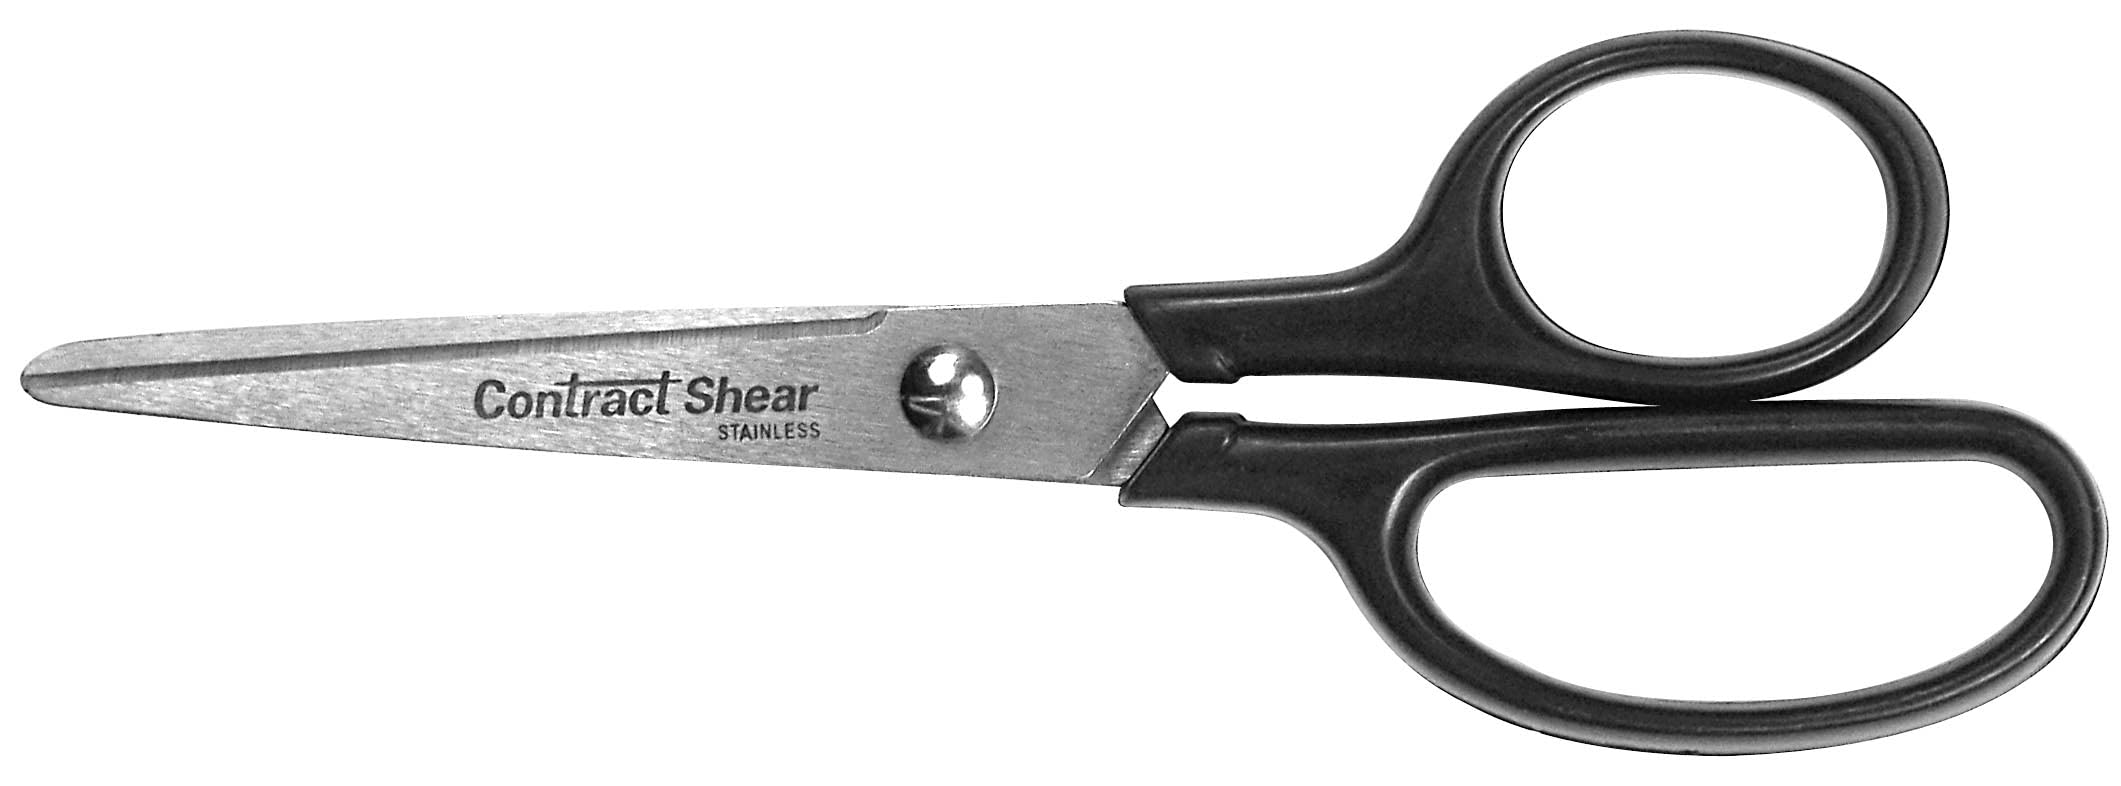 Westcott Contract Stainless Steel Scissors, 6", Black $2.70